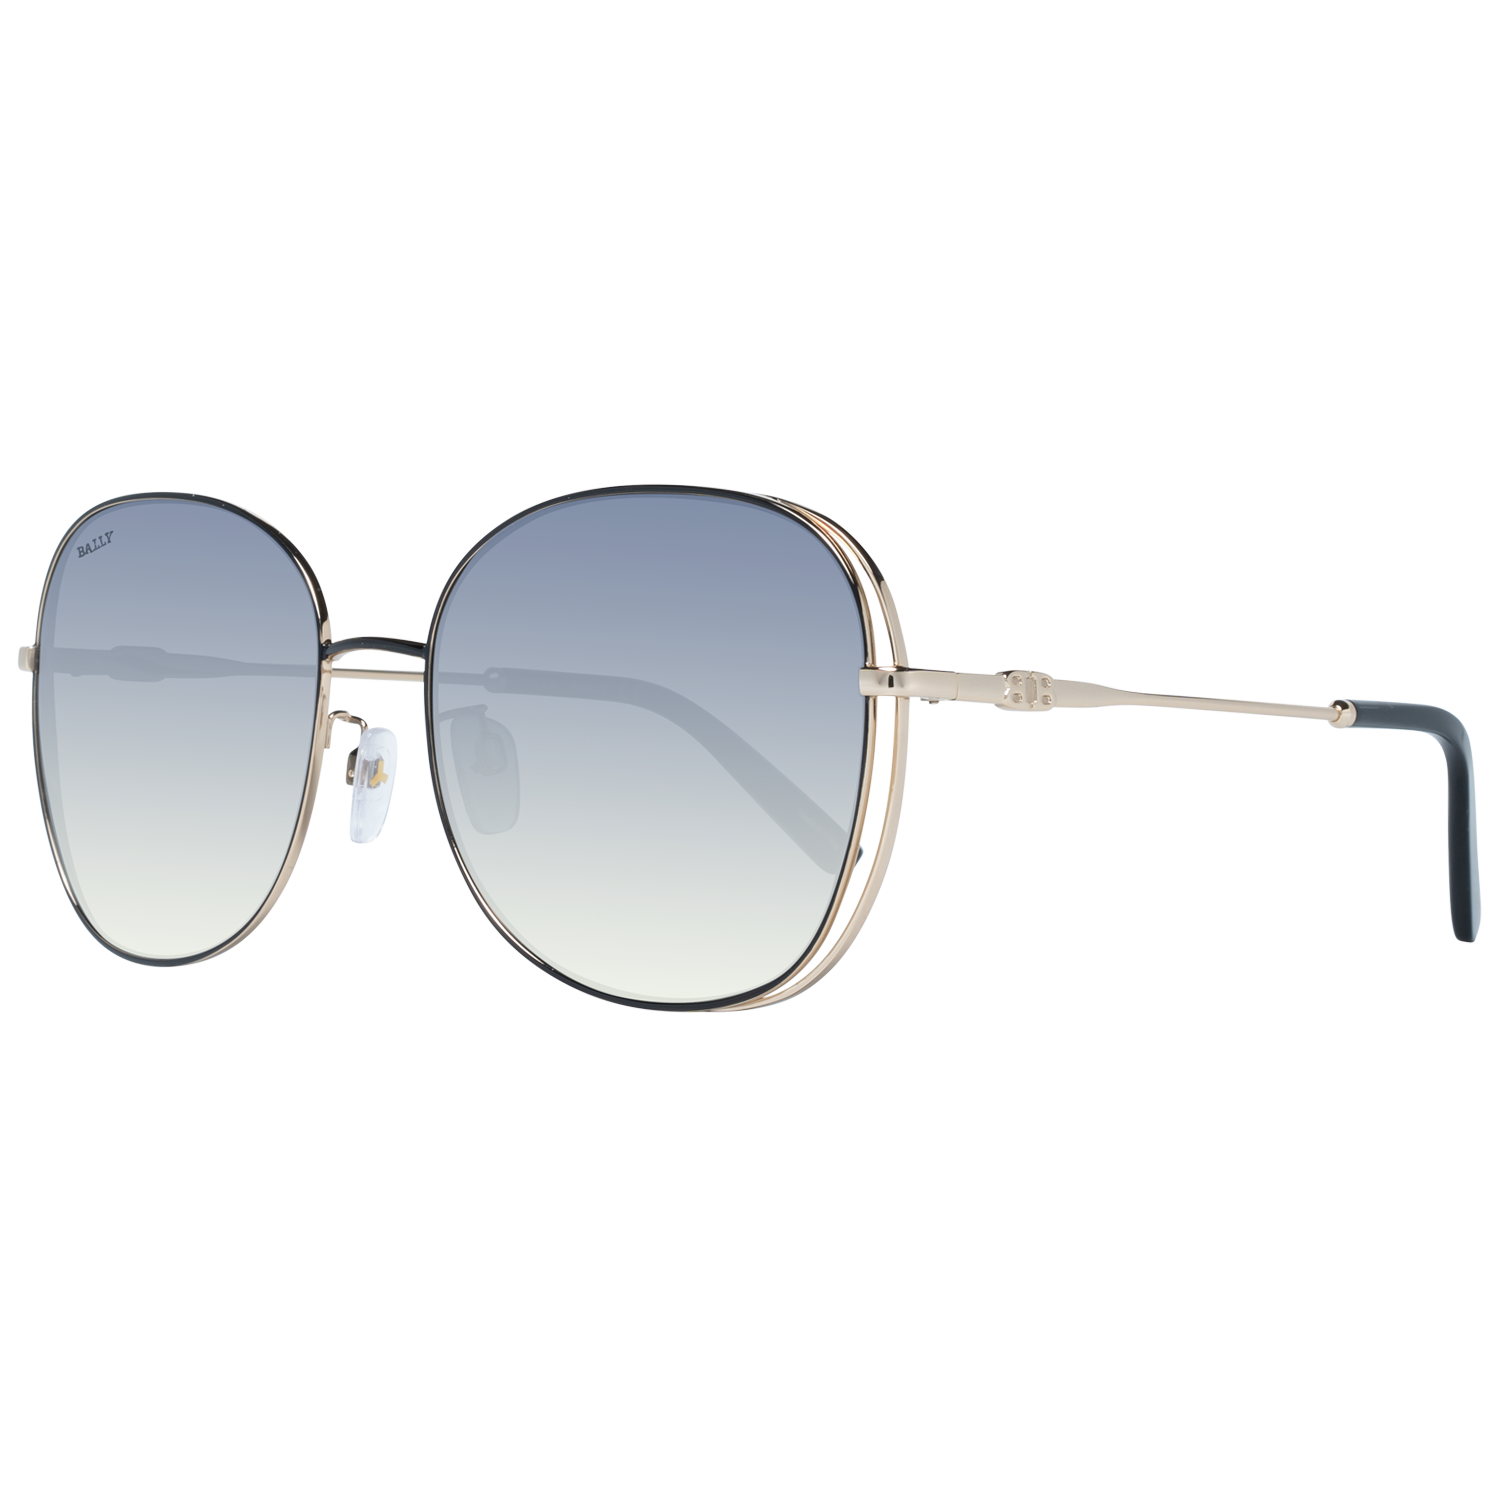 BALLY EYEWEAR By0026 Sunglasses, Black, 58 : Amazon.co.uk: Fashion